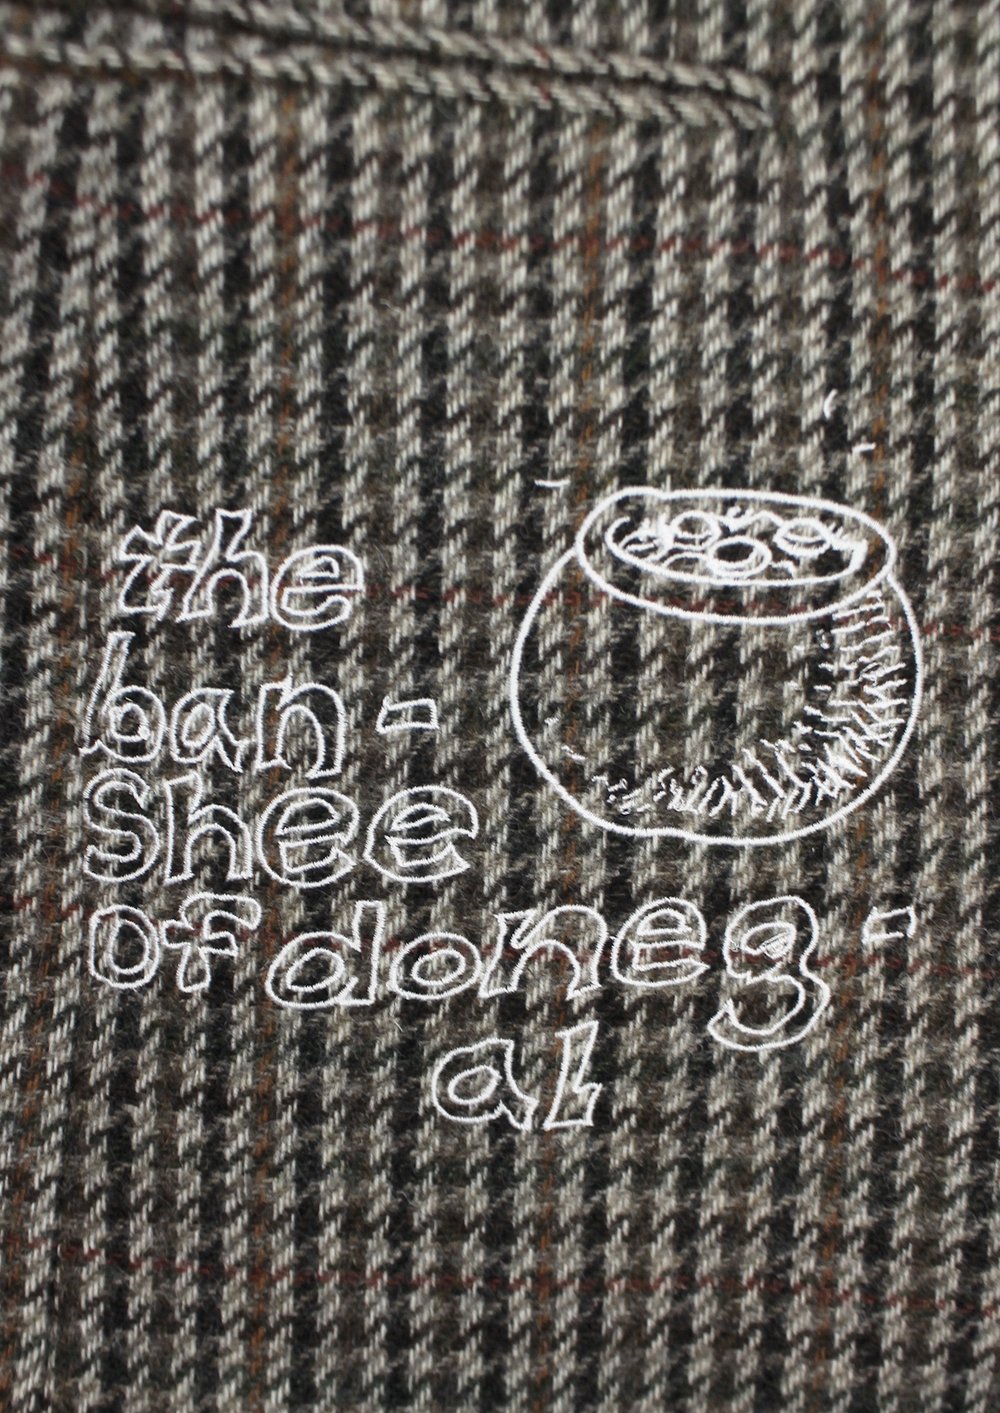 Image of Banshee tweed blazer (Unique to each person)